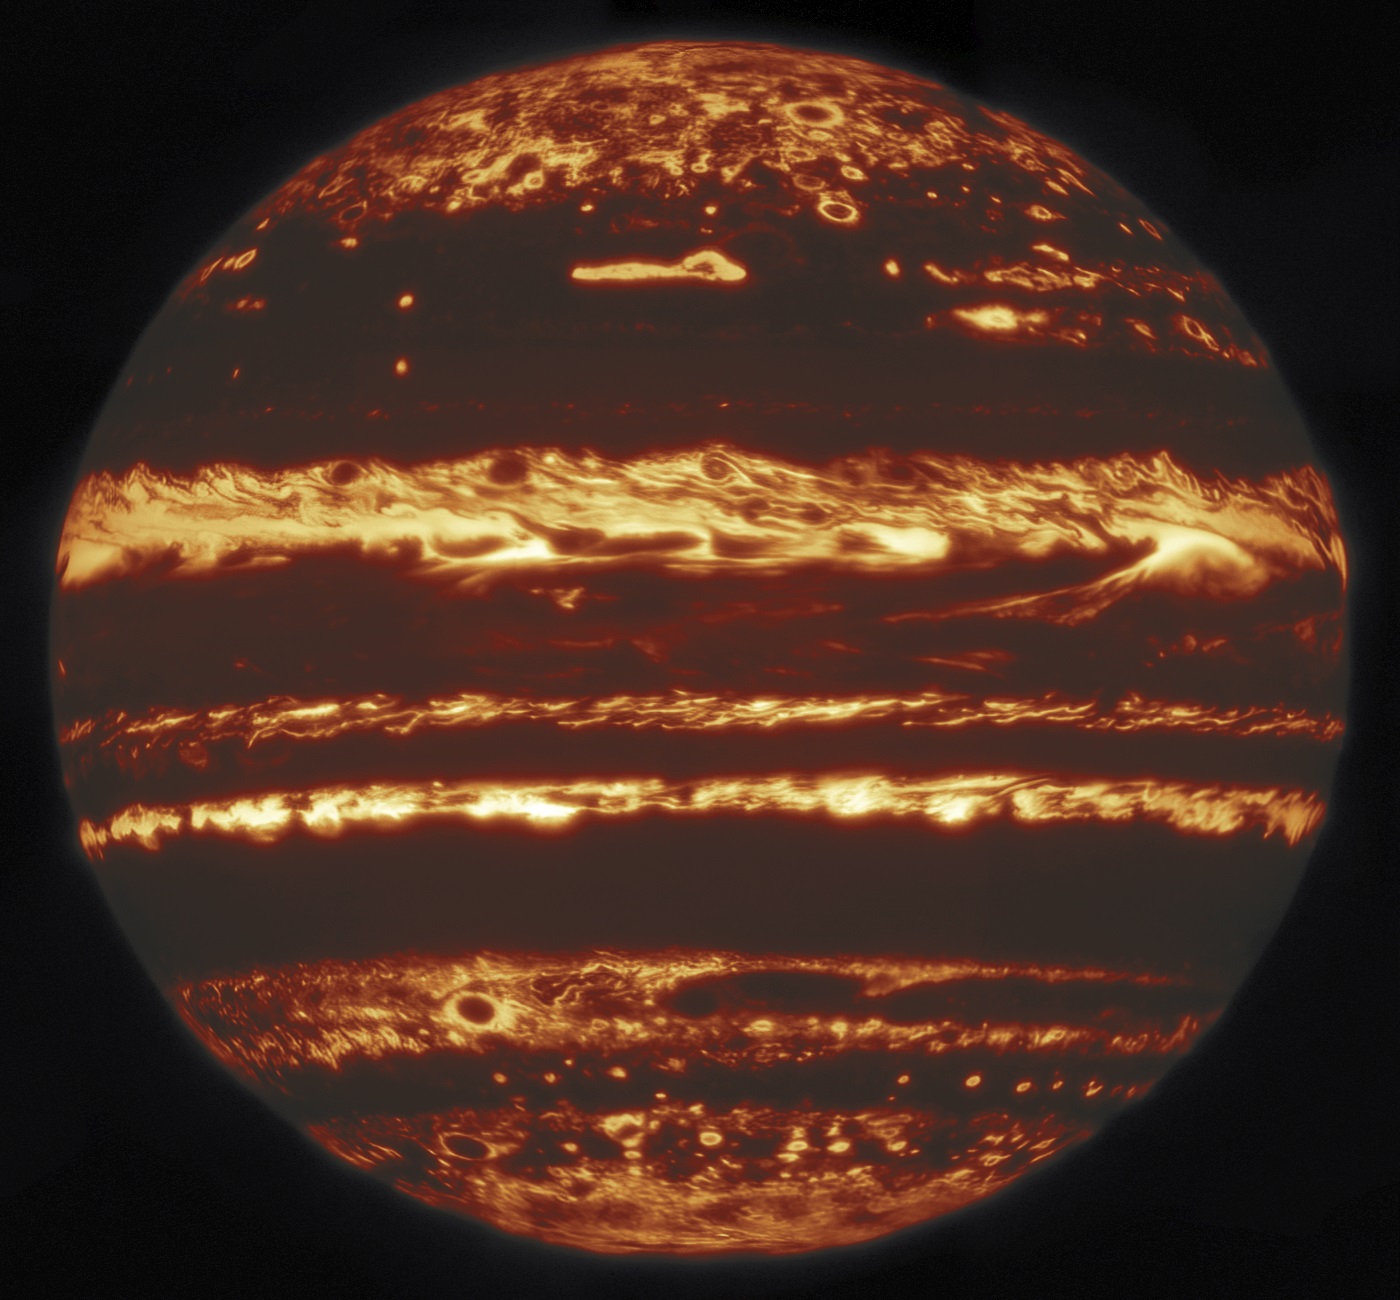 planeet Jupiter indrukwekkende stormen